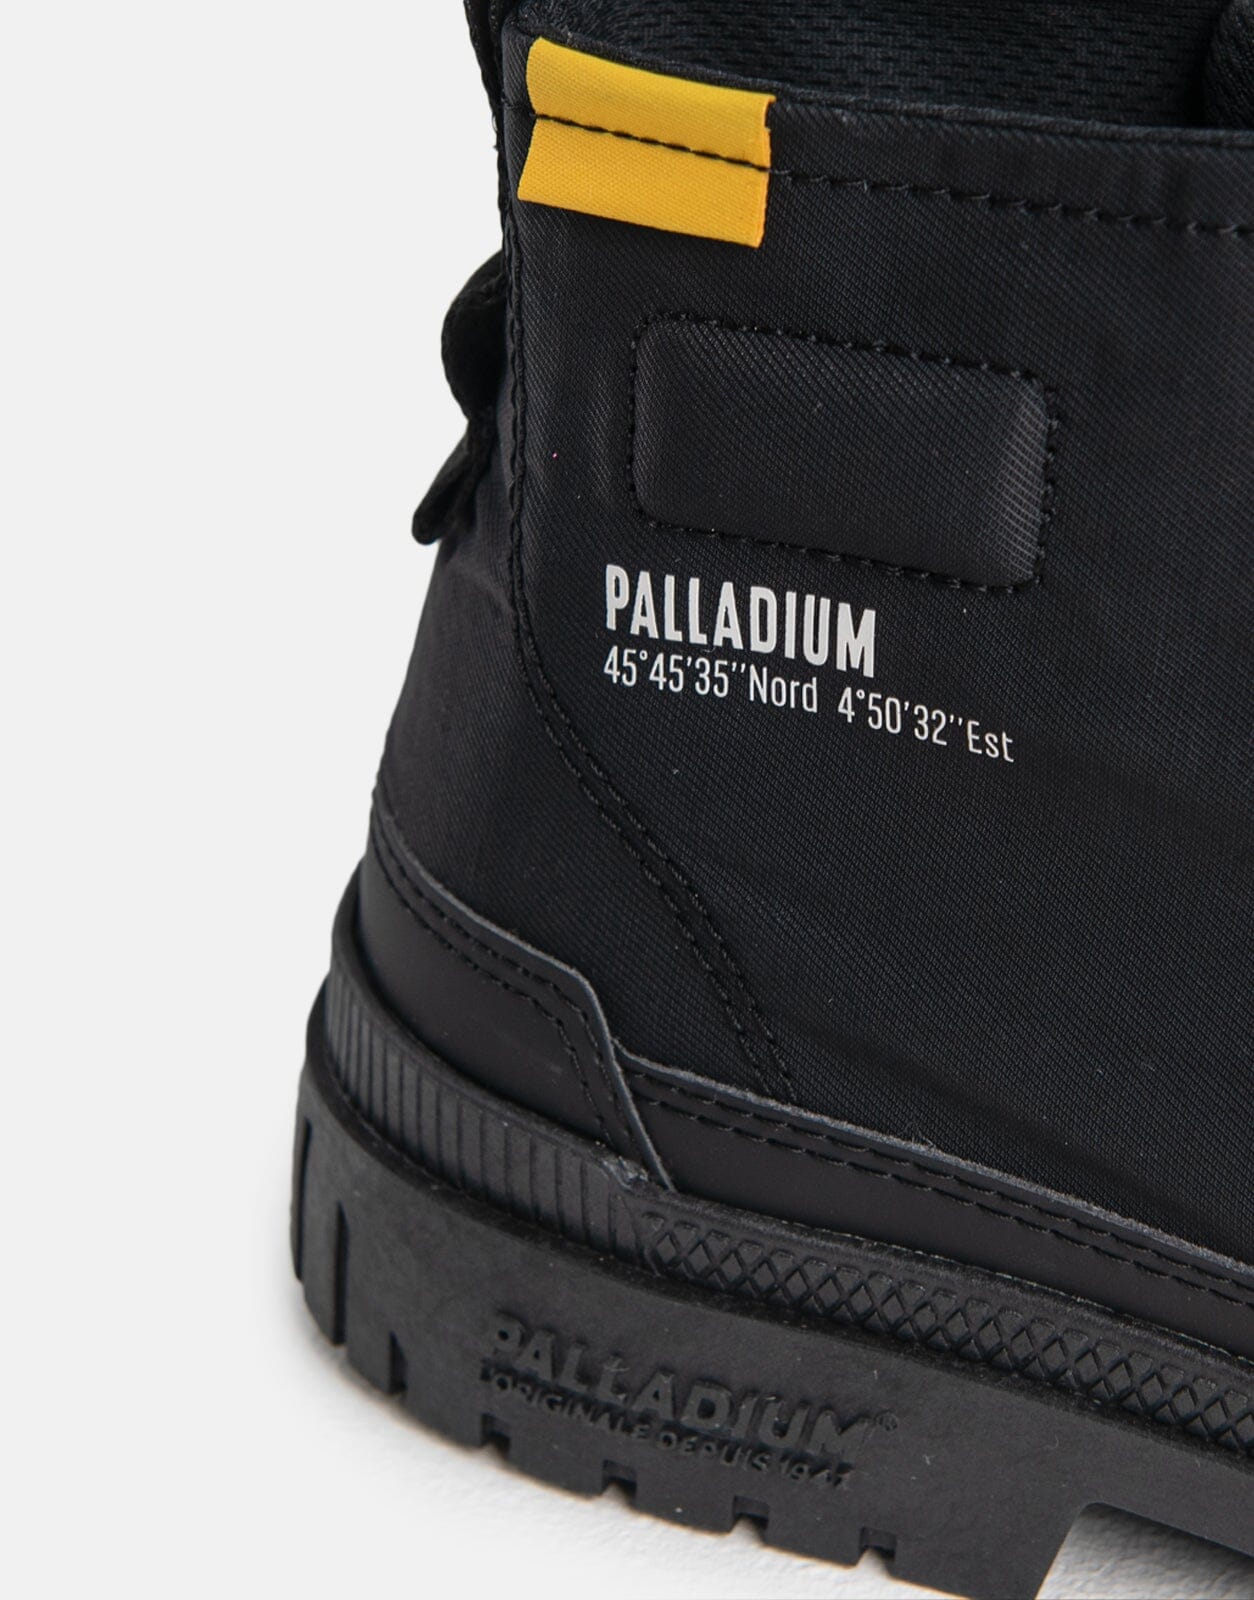 Palladium SP20 Hi Tech Black Boots - Subwear